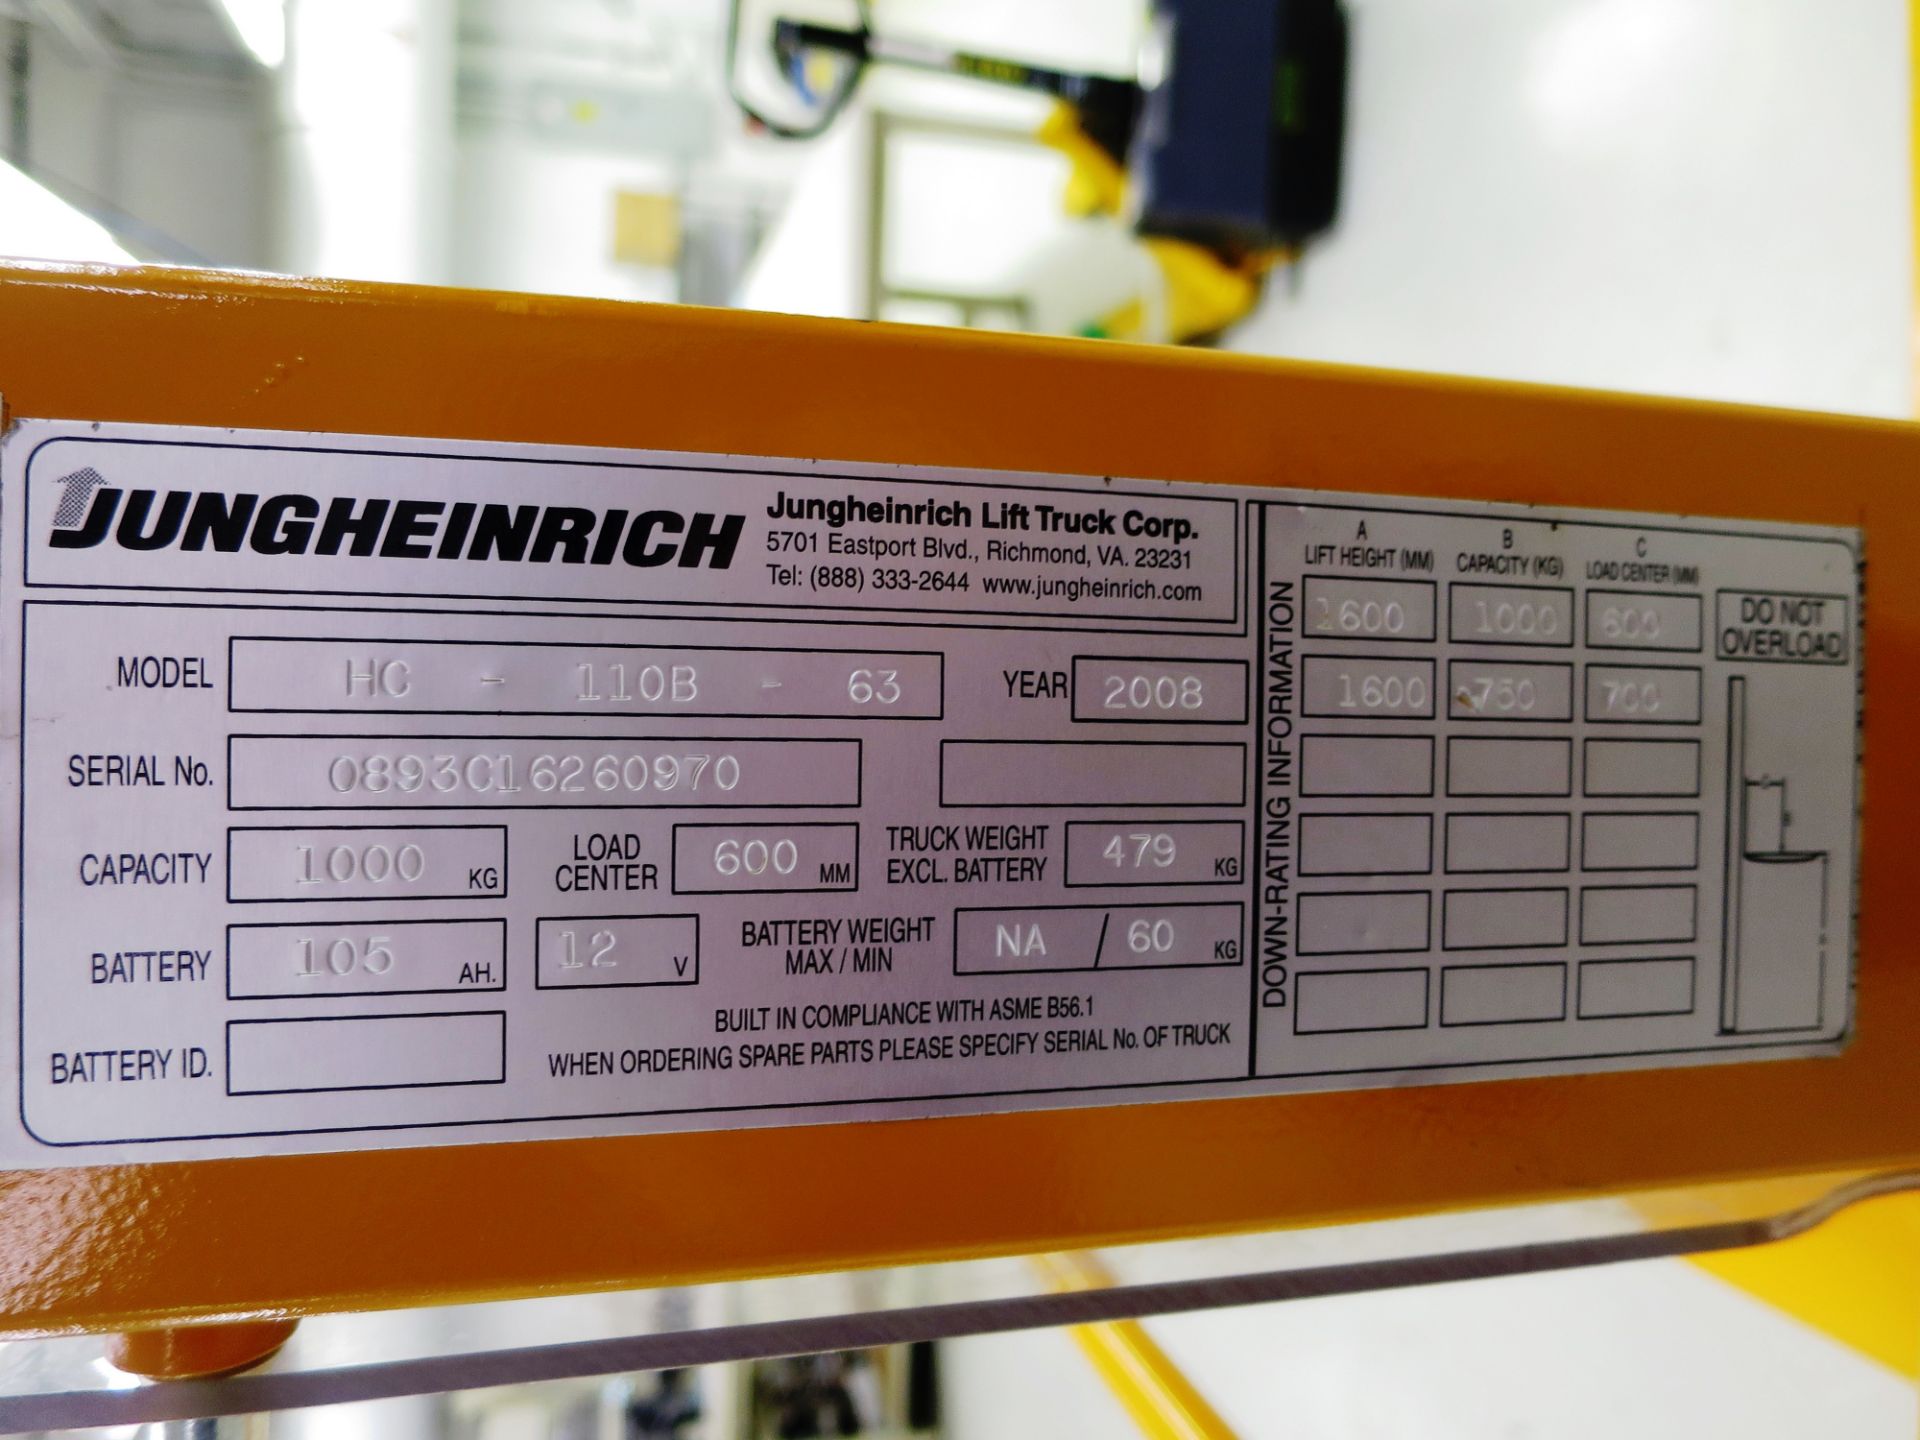 Jungheinrich HC 110B Power Lift Stacker, S/N 0893016260970, New 2009 - Image 7 of 8